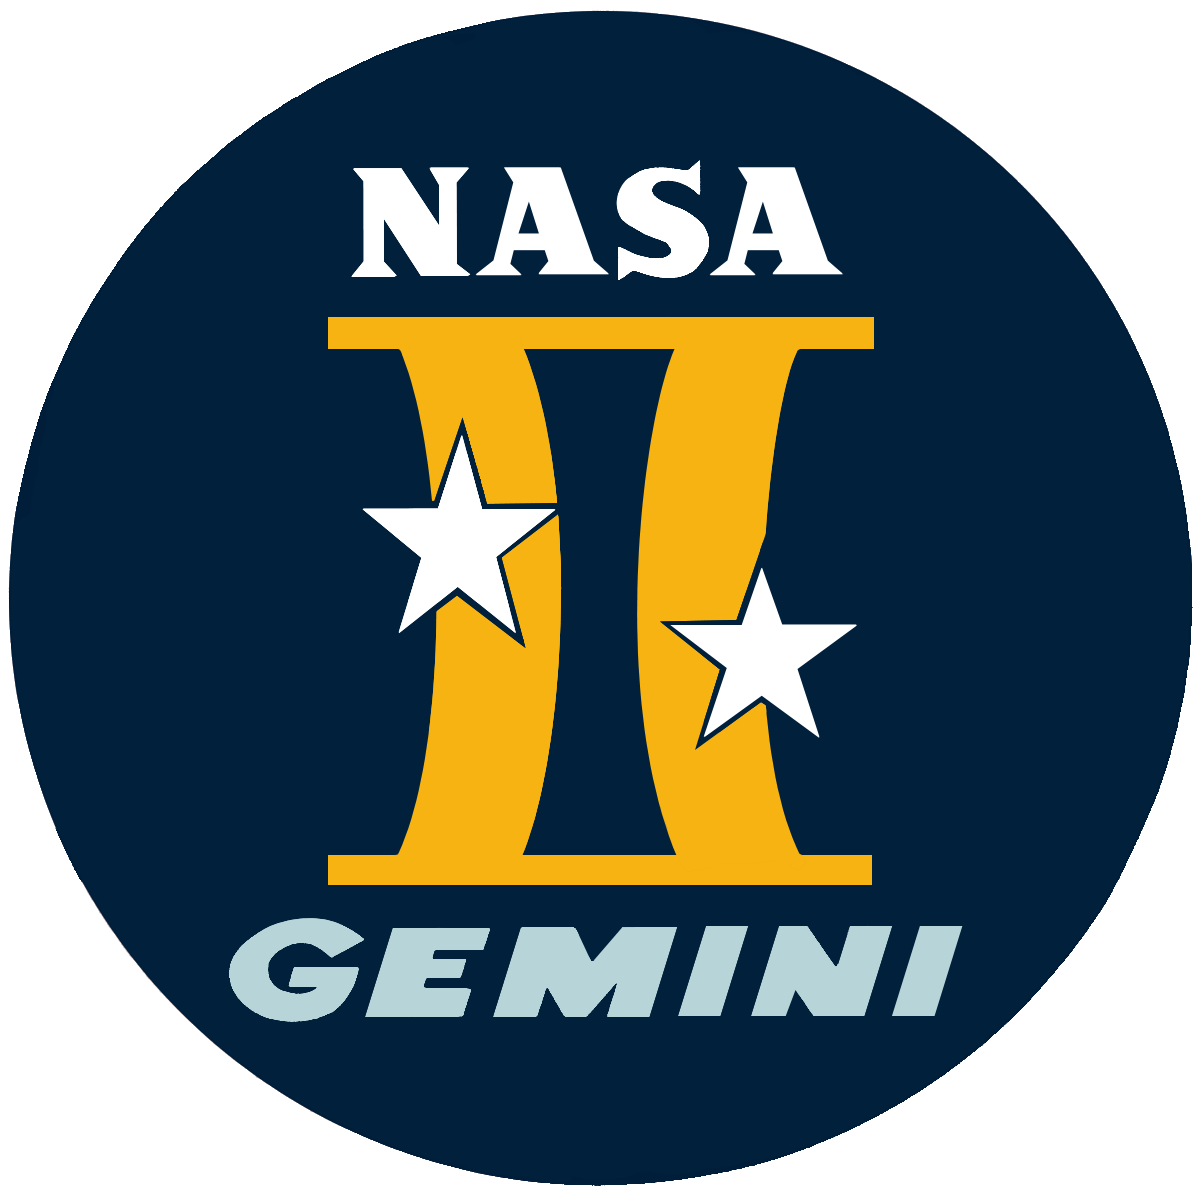 NASA Moon Logo - Project Gemini